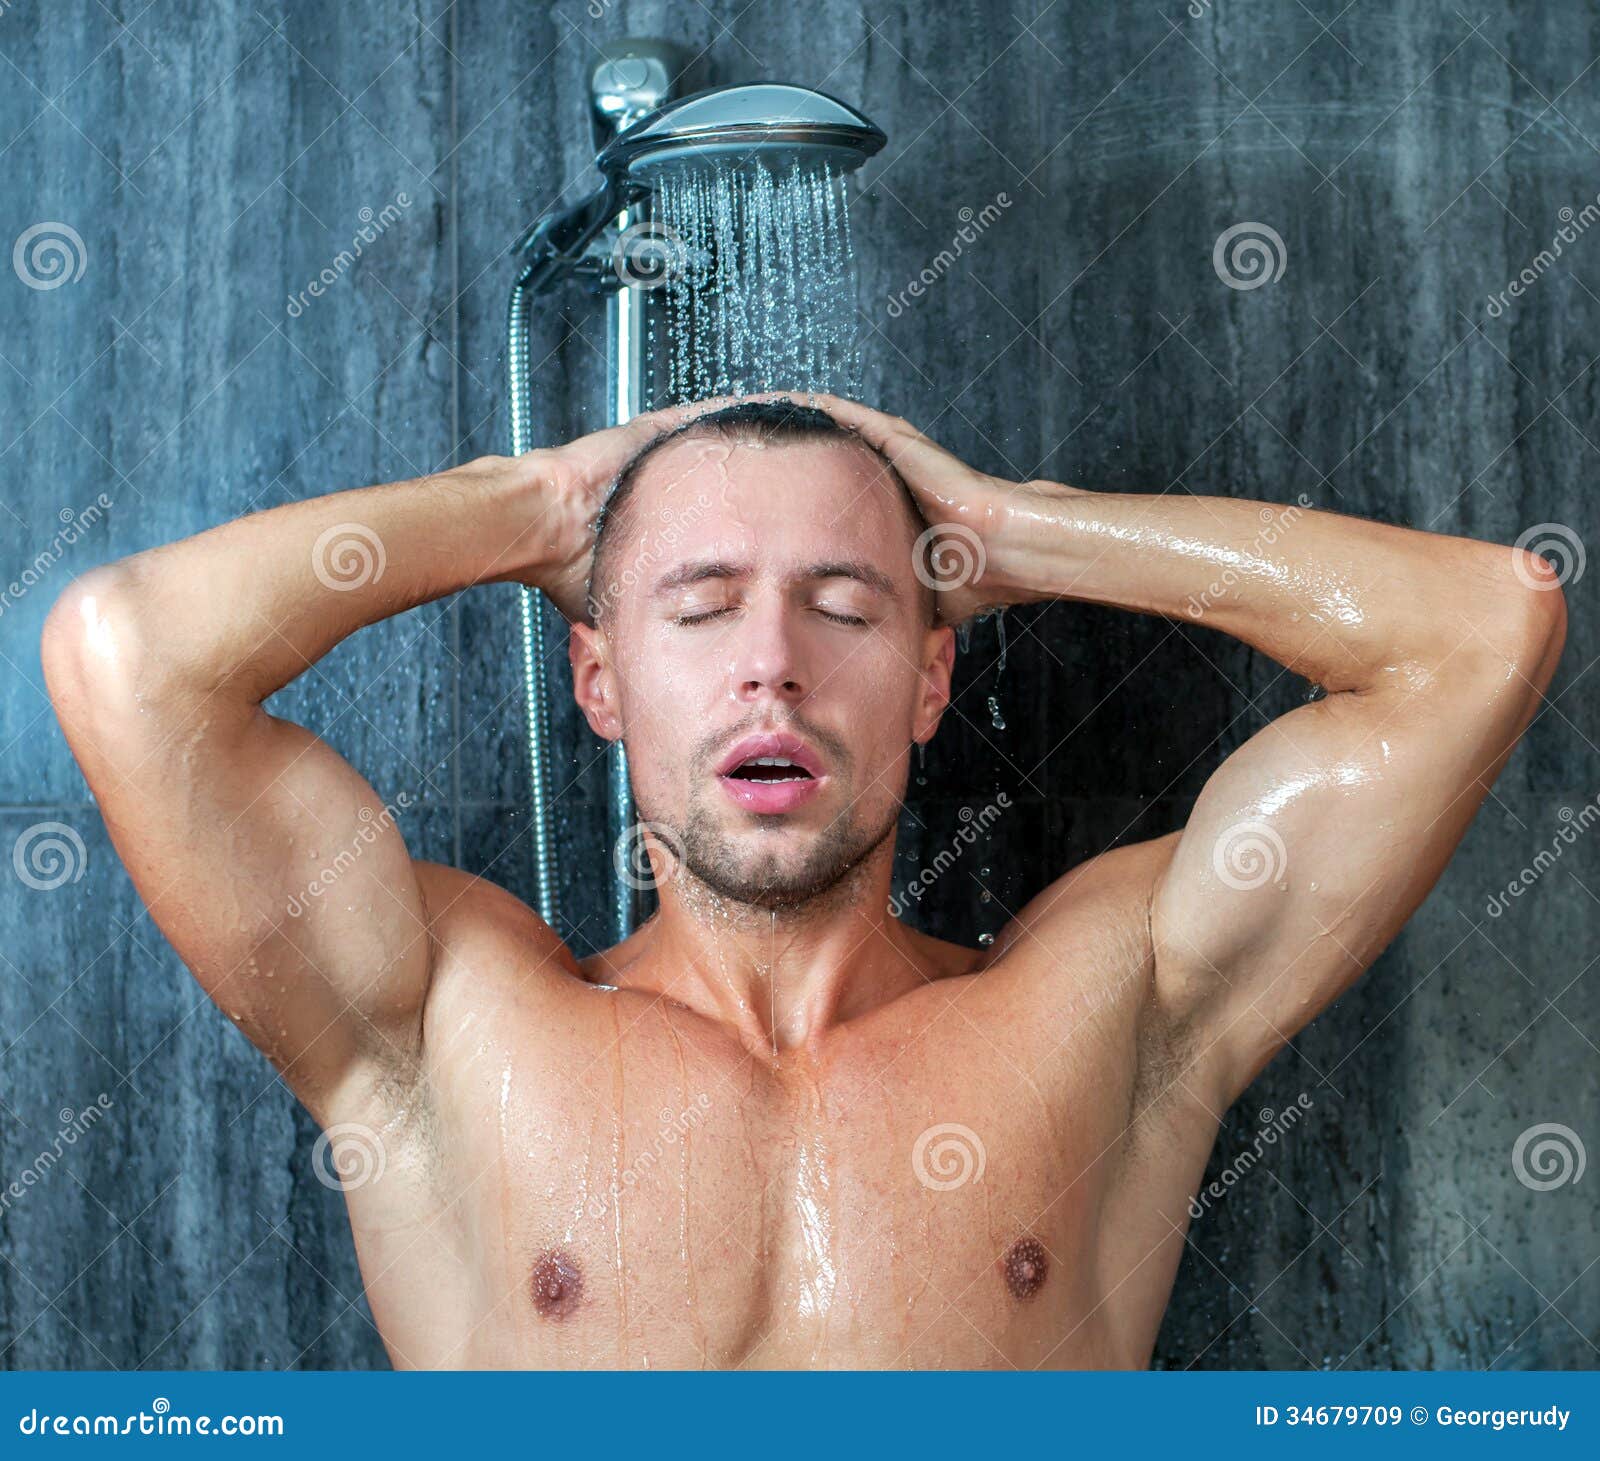 male shower selfies nude photo